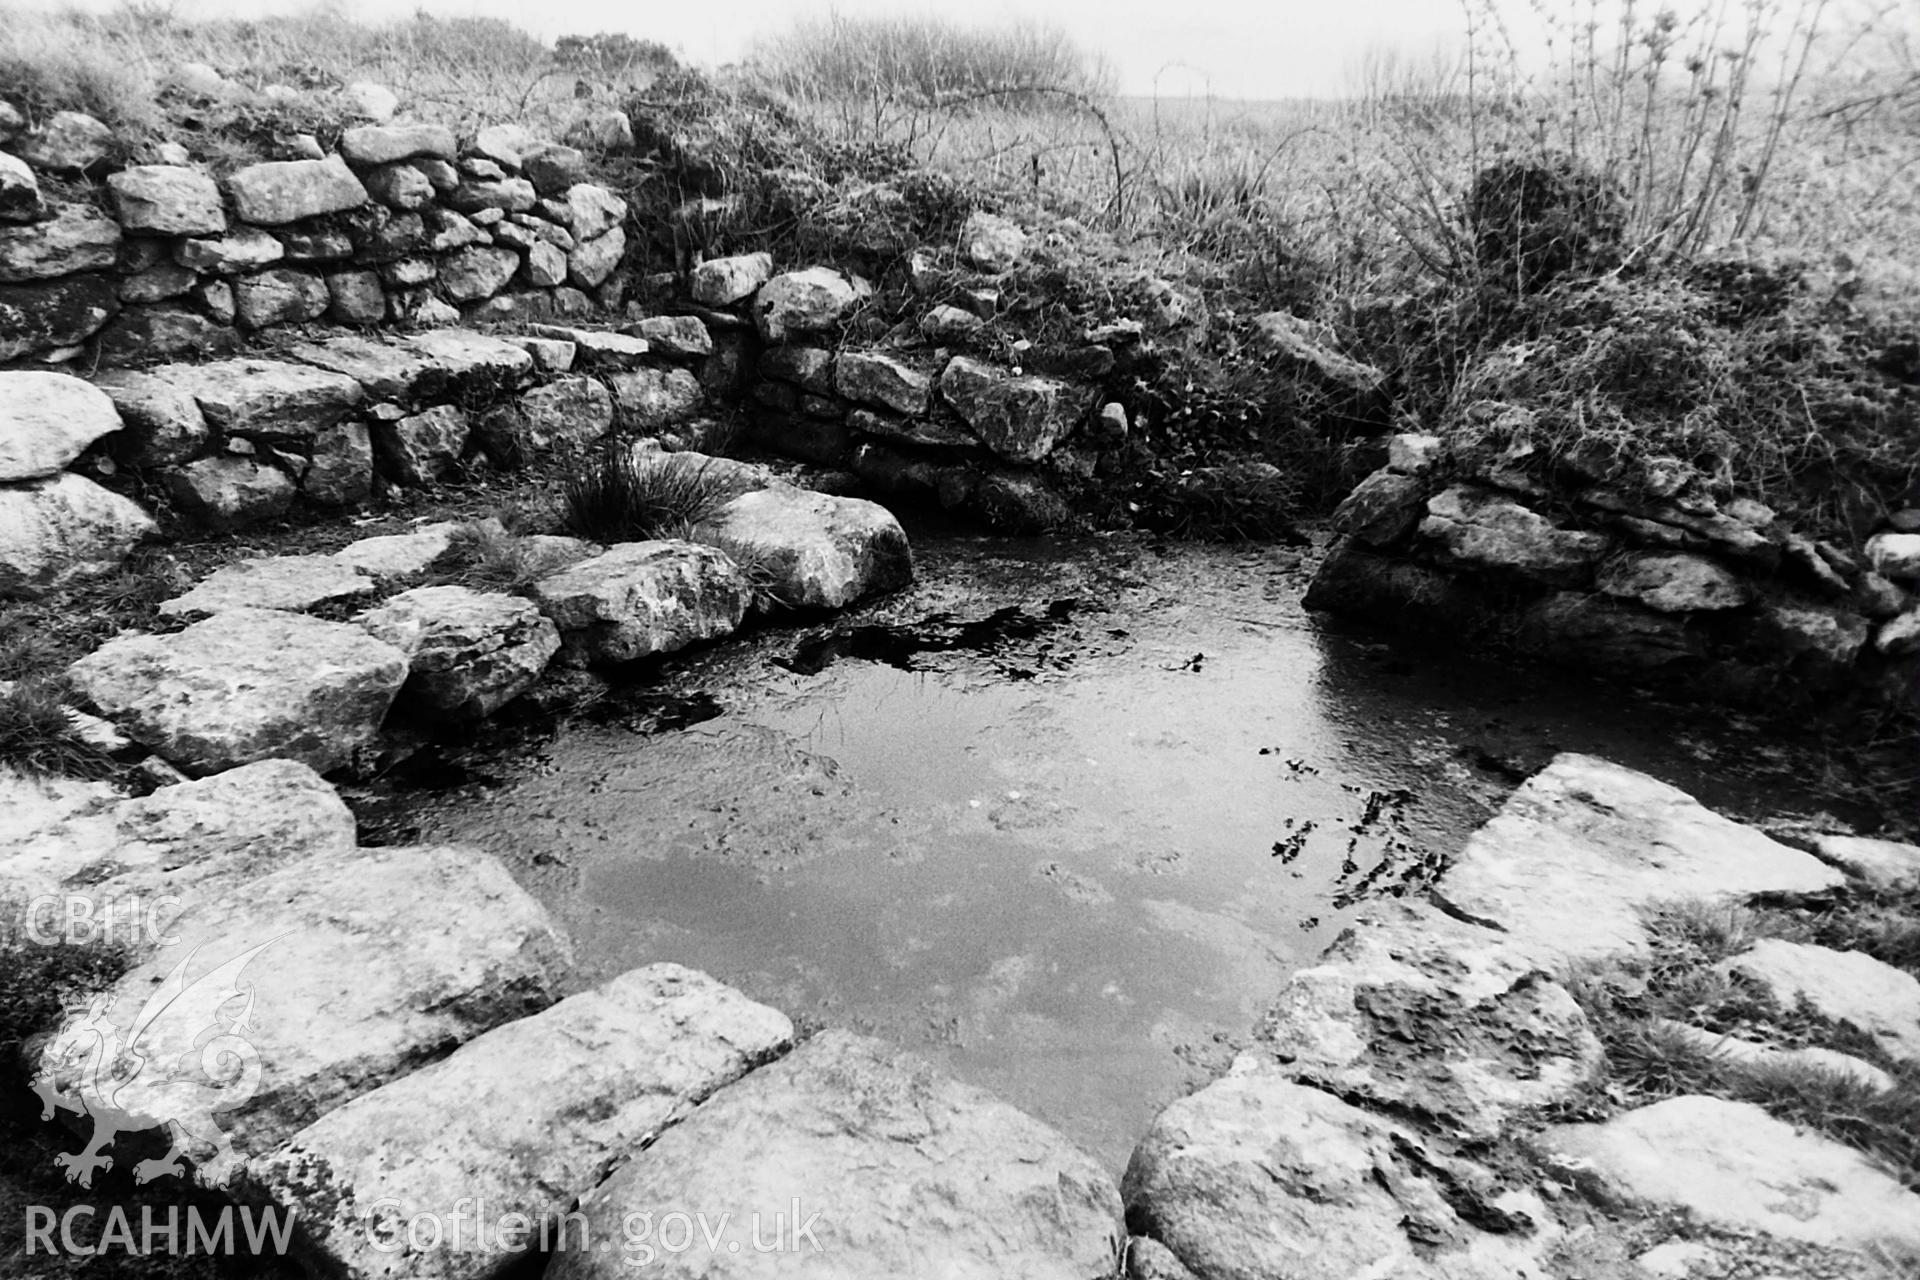 Black and white photo showing Ffynnon Fyw, taken by Paul R. Davis, undated.